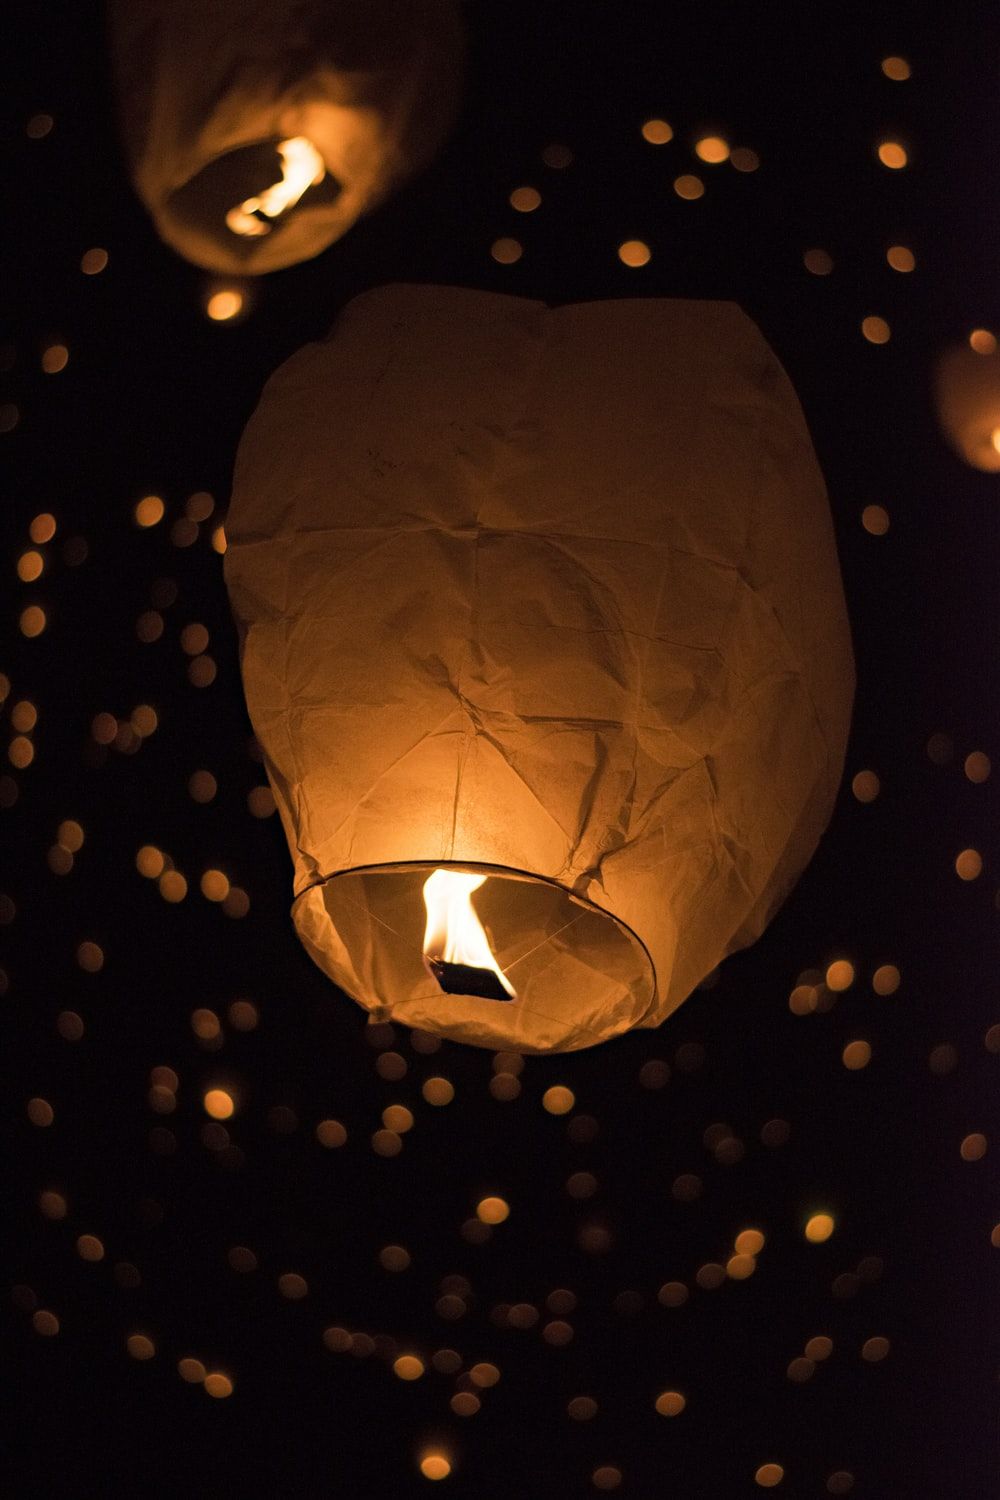 Lantern Festival Picture. Download Free Image